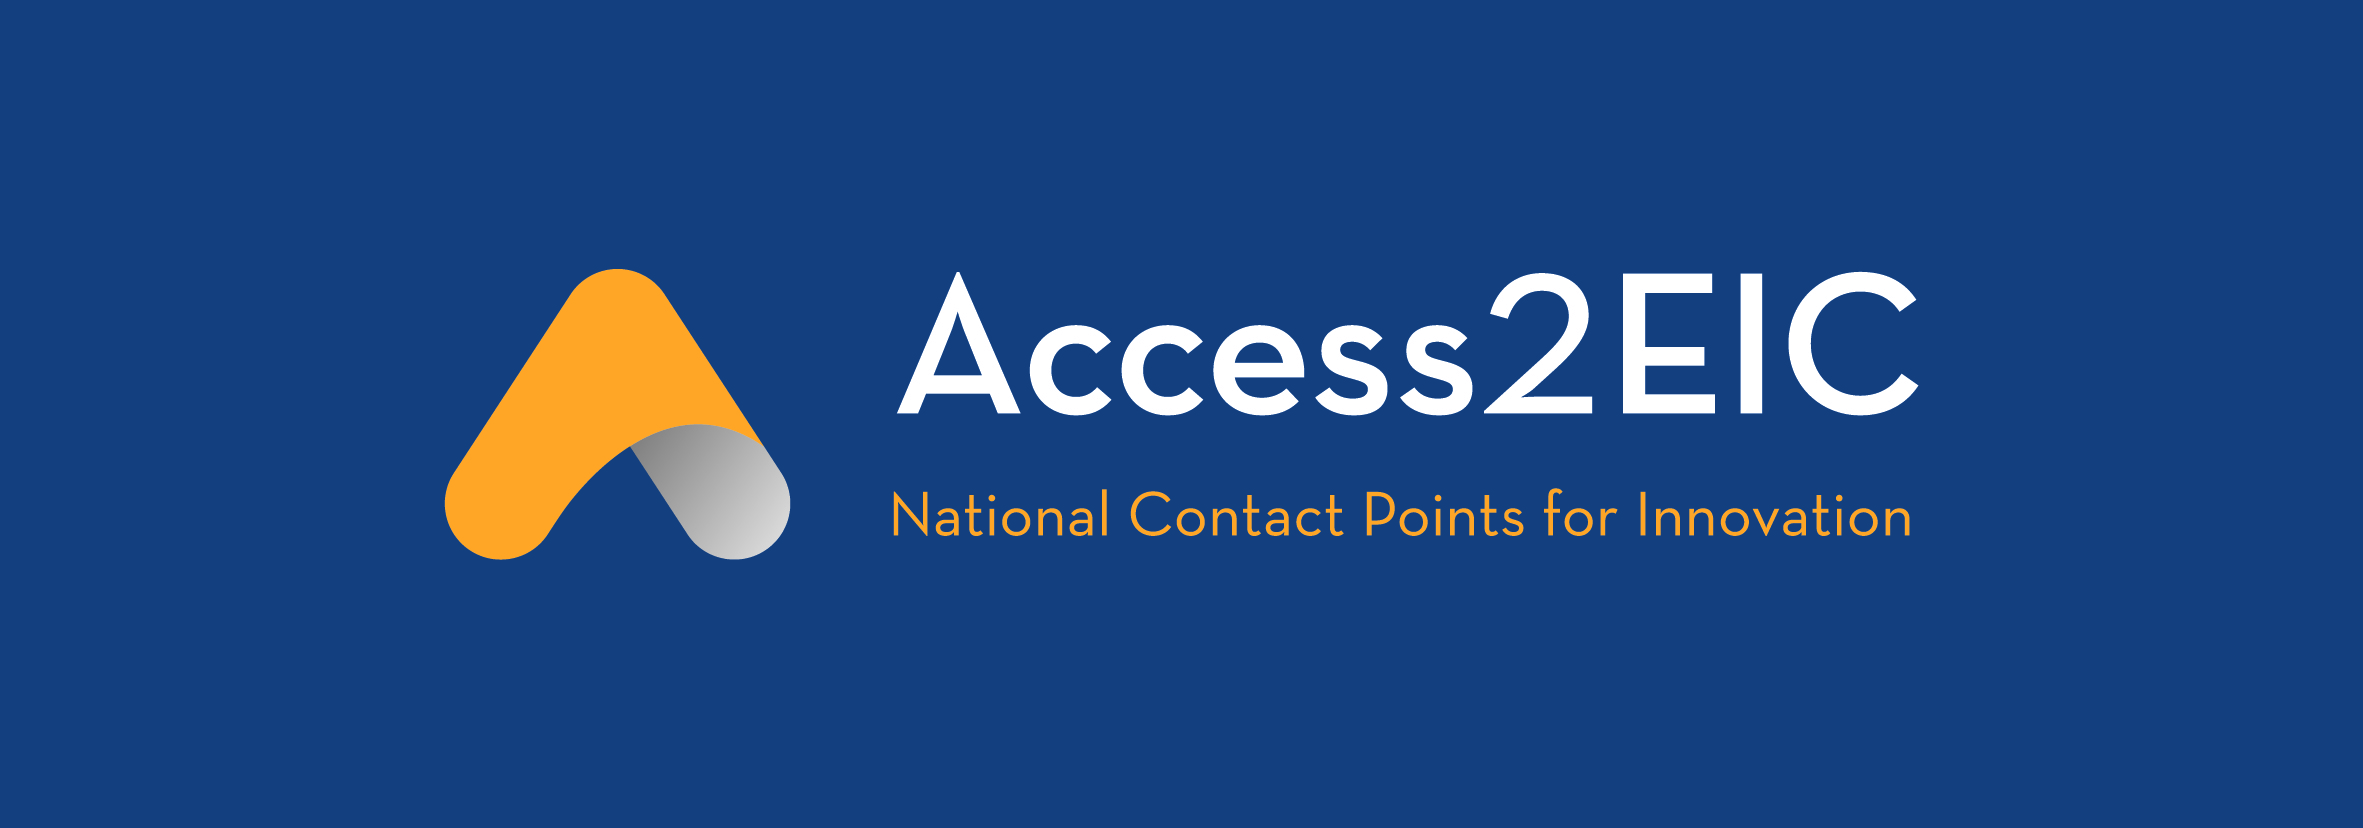 Access2EIC logo1